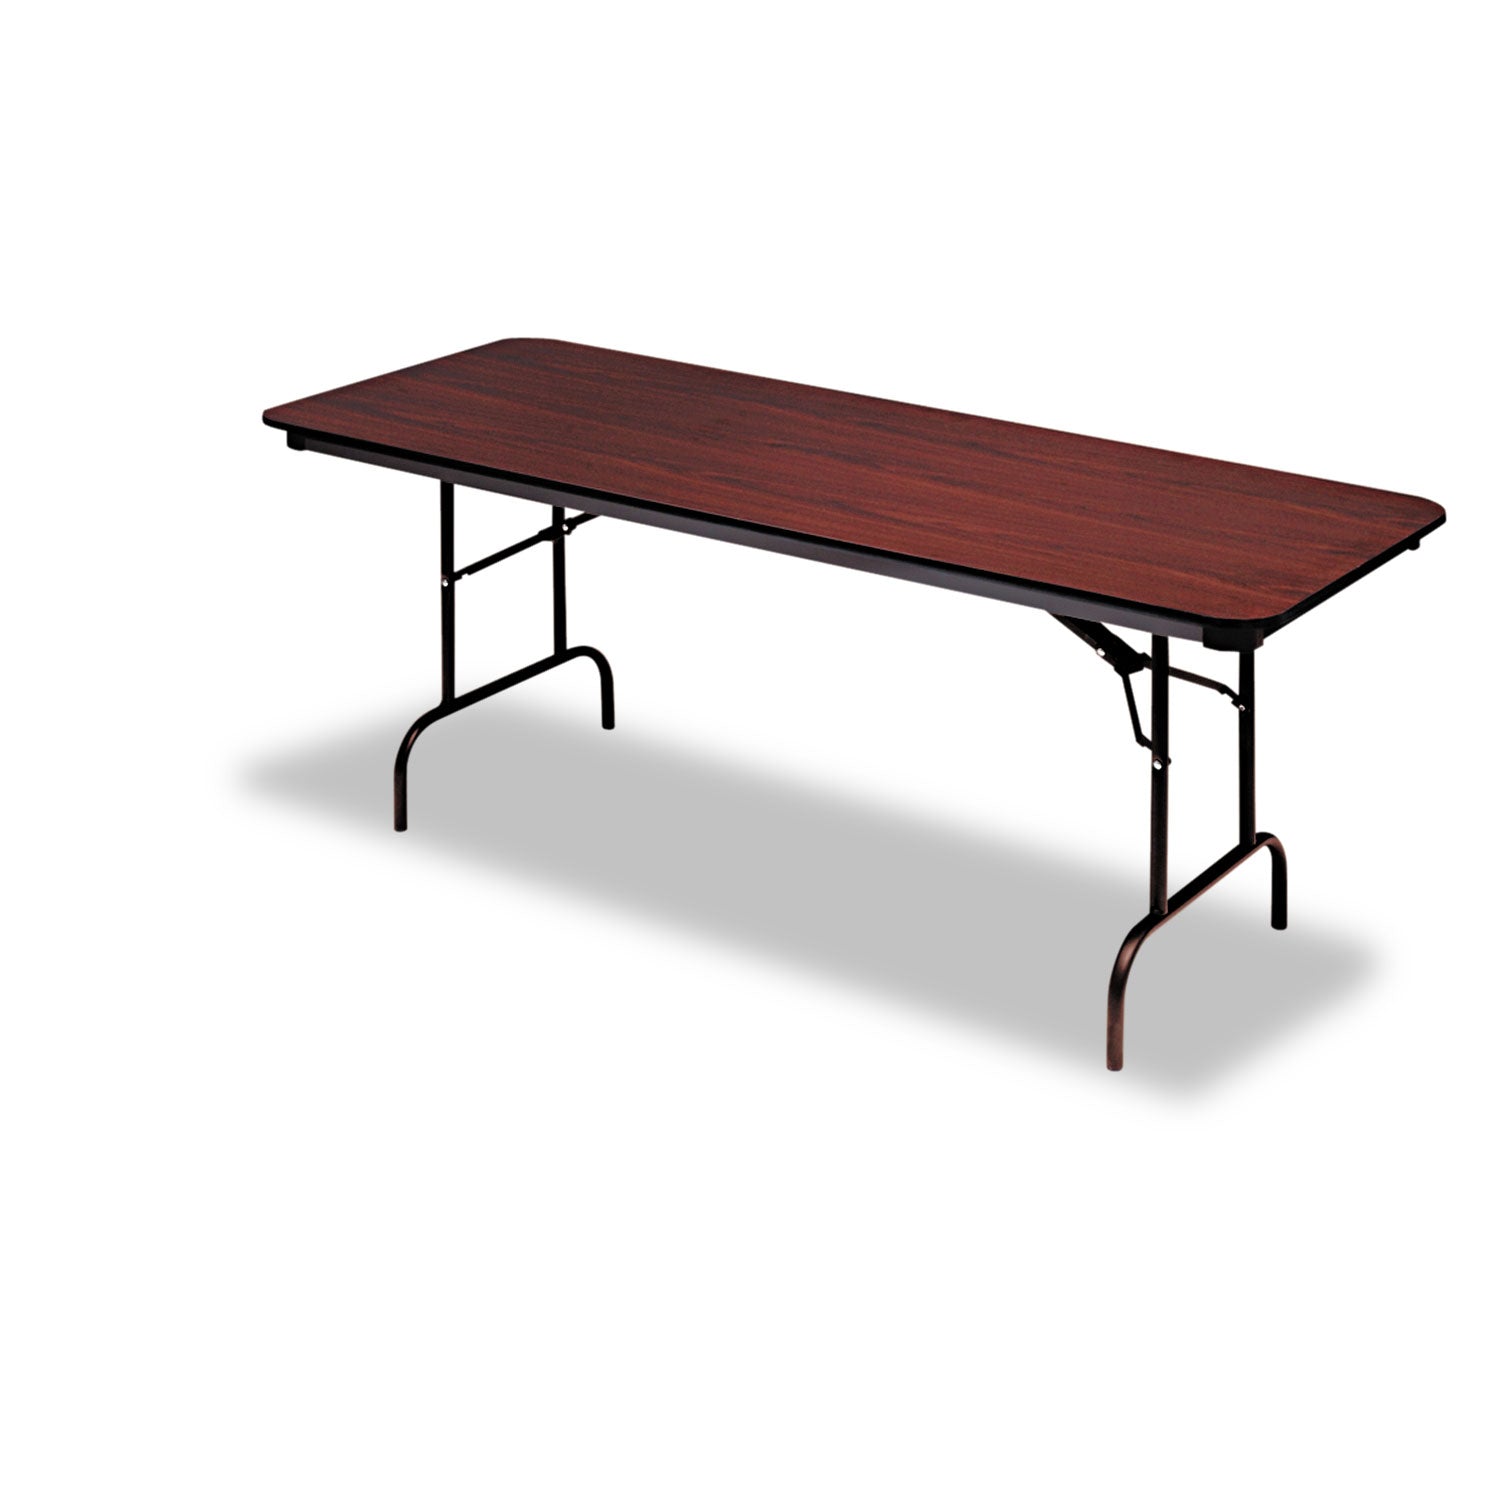 OfficeWorks Commercial Wood-Laminate Folding Table, Rectangular, 96" x 30" x 29", Mahogany - 